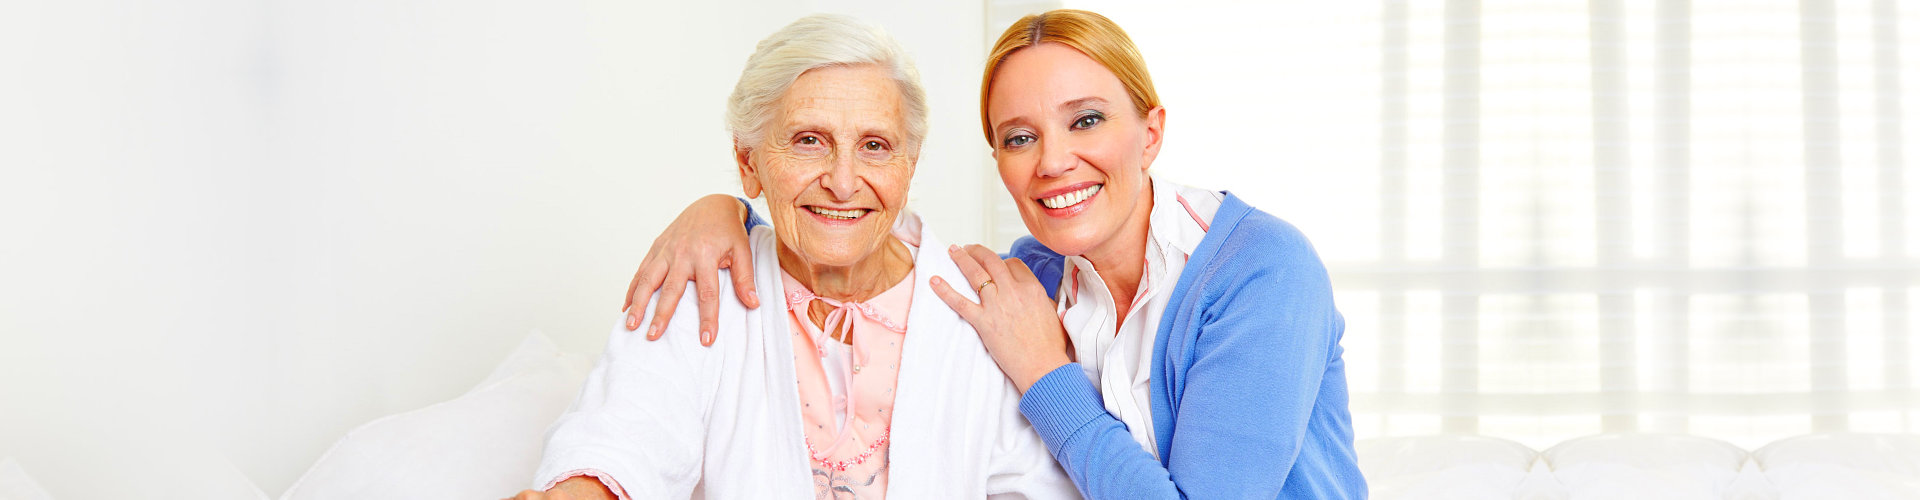 a caregiver and senior woman smiling